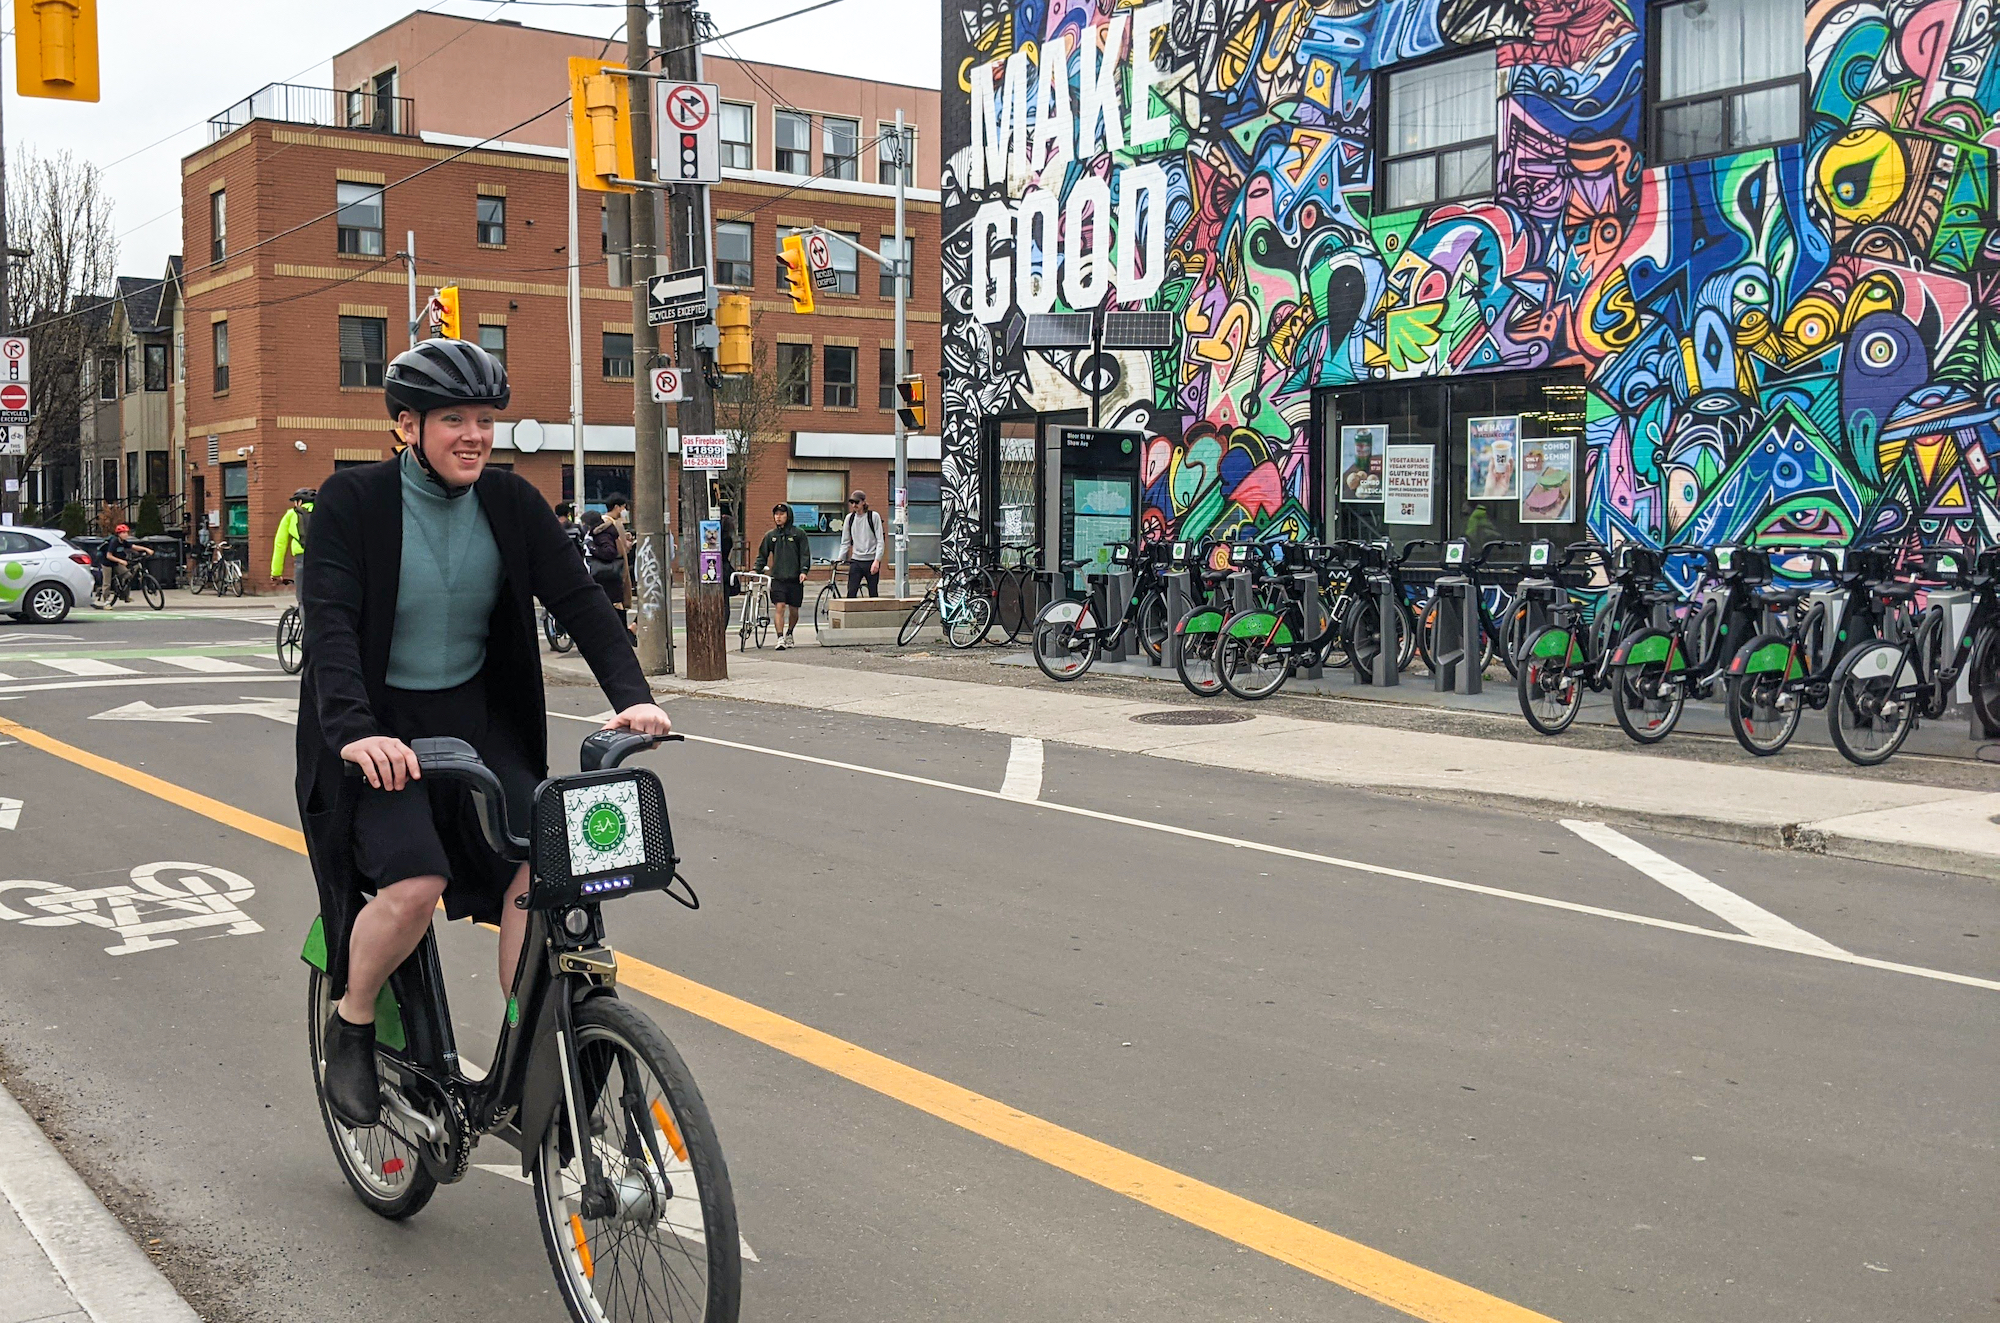 Riding a Bike Share bike in Toronto against a colourful mural